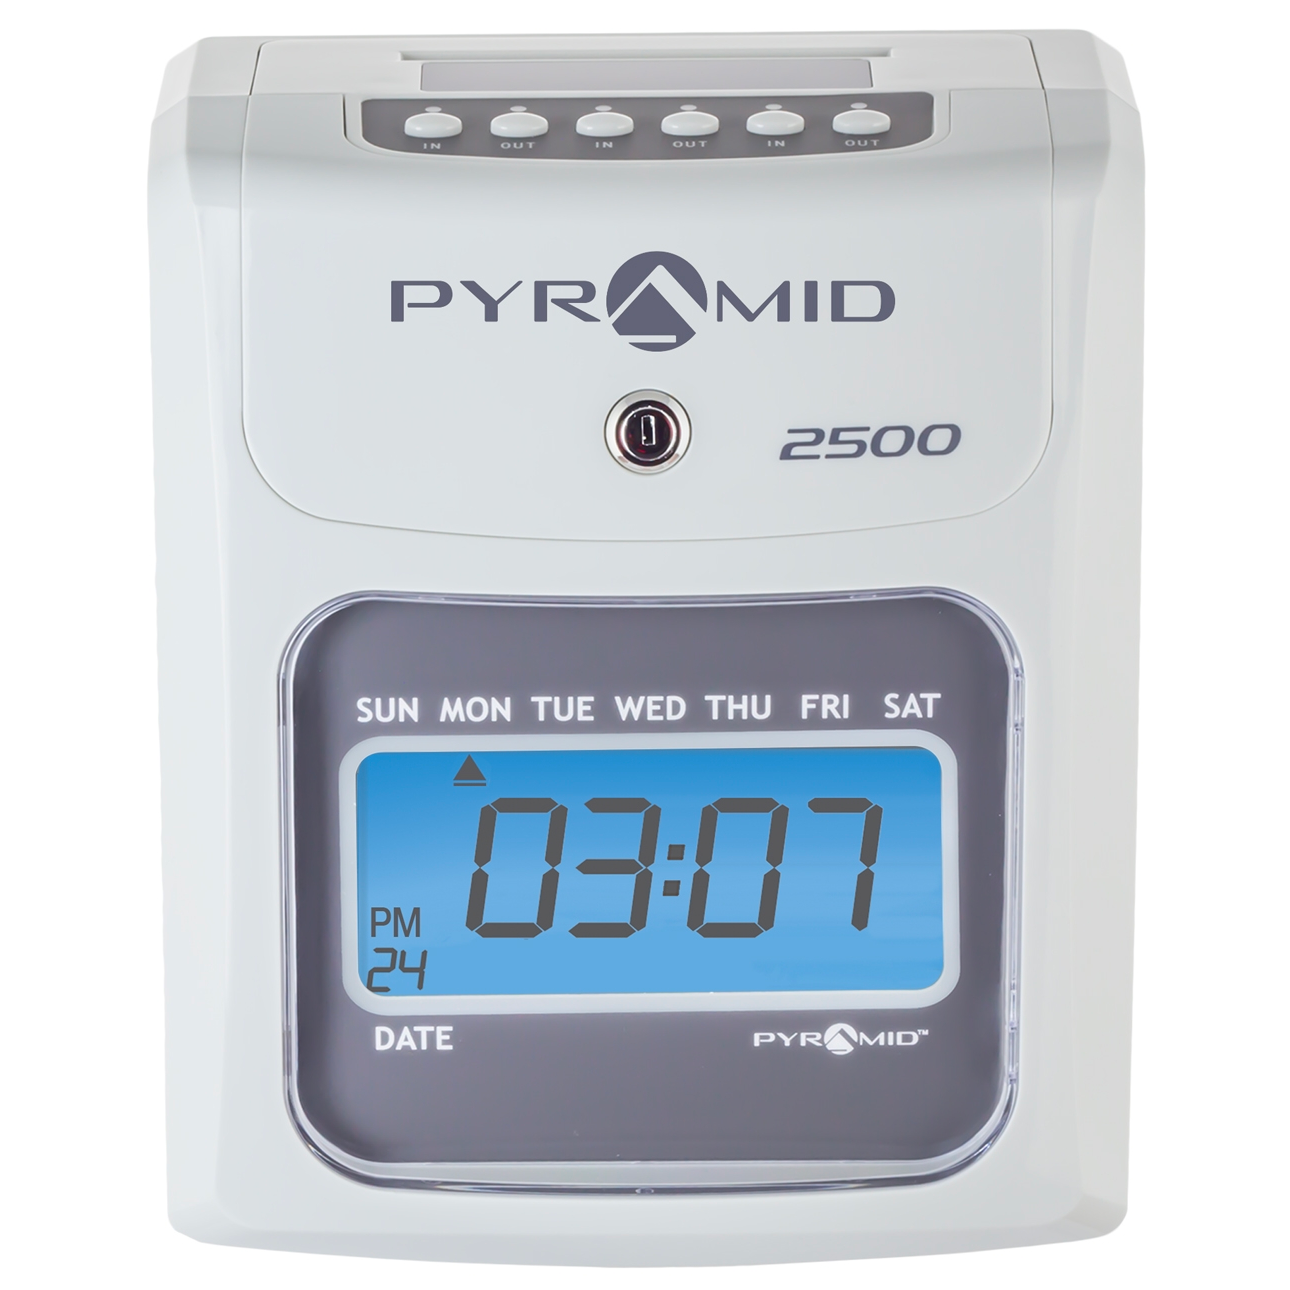 Pyramid 2500 Time Clock